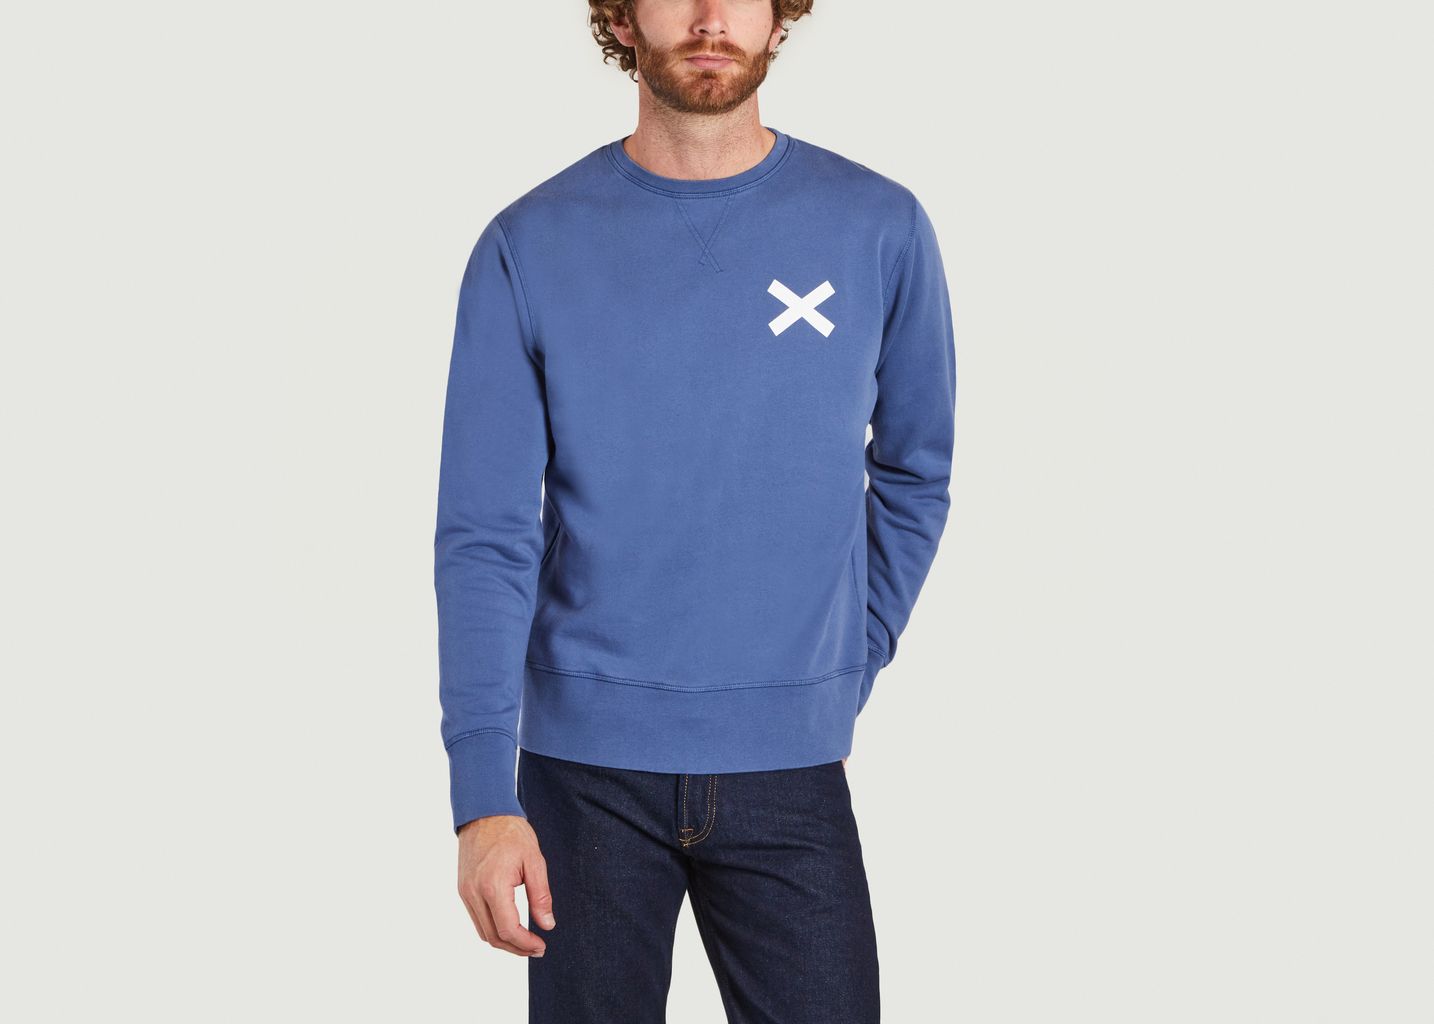 Sweatshirt en coton bio avec imprimé croix - Edmmond Studios